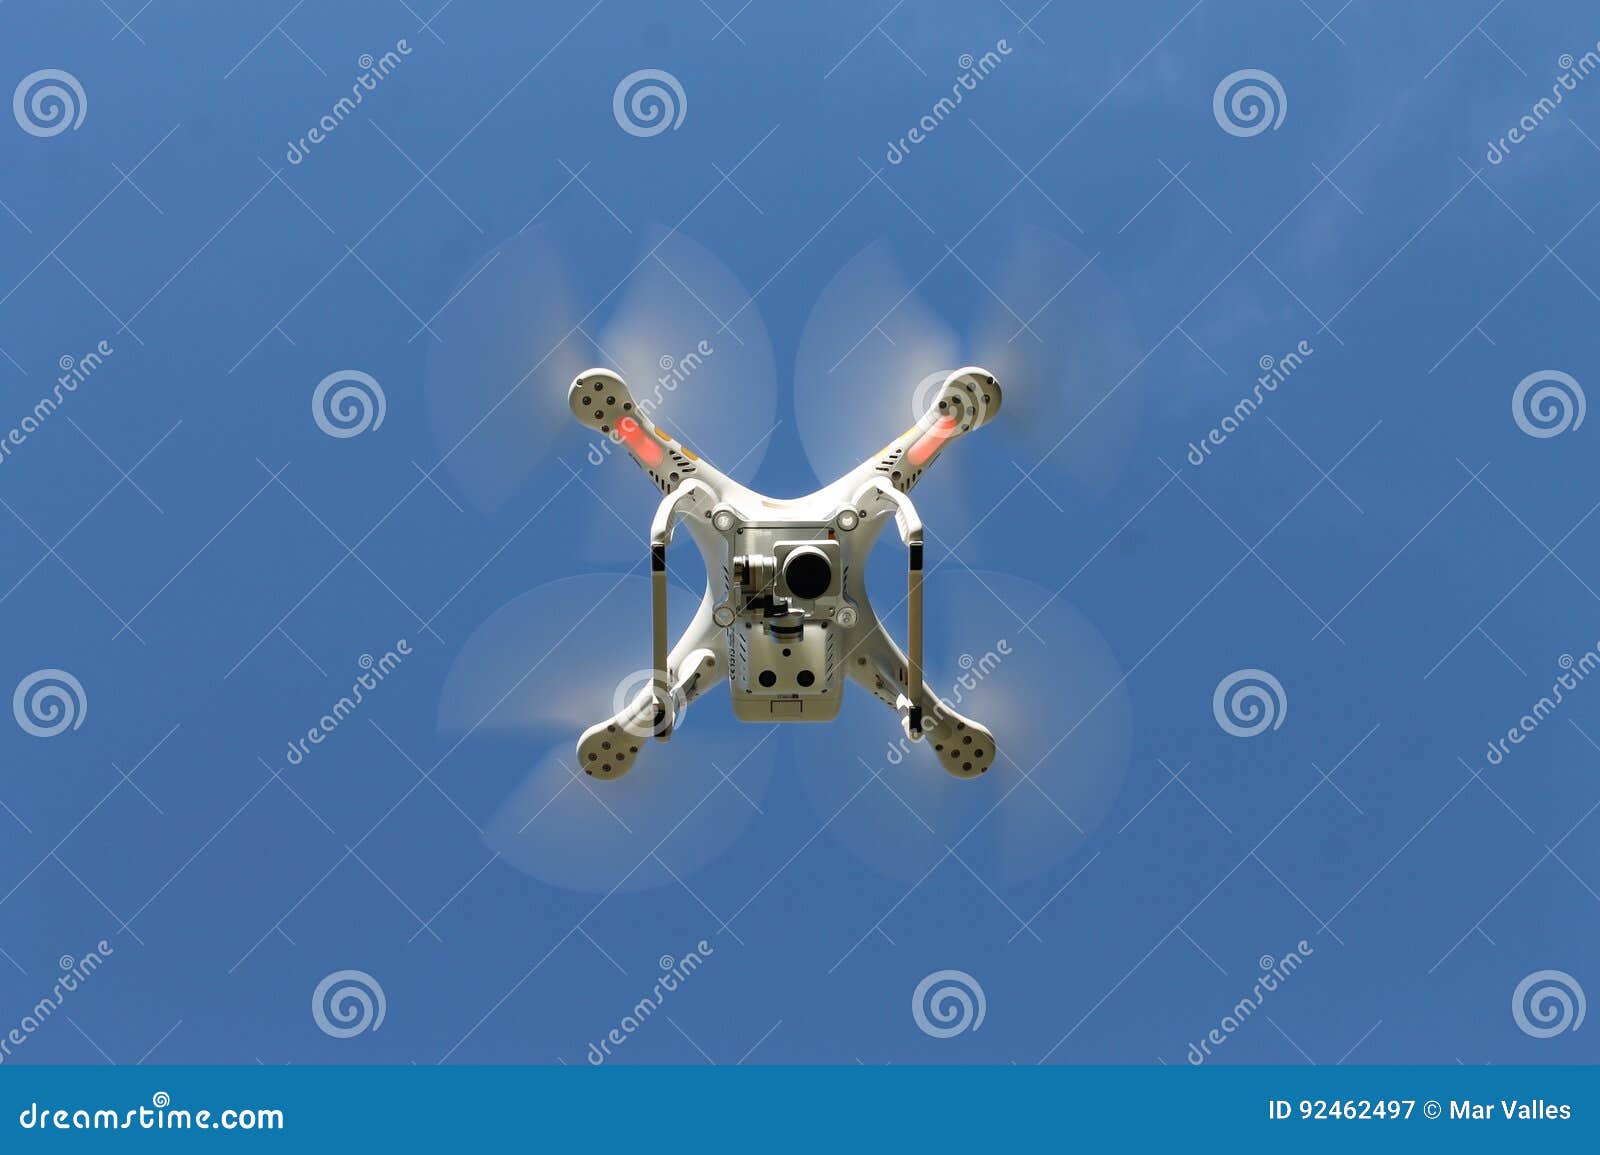 dron seen from below